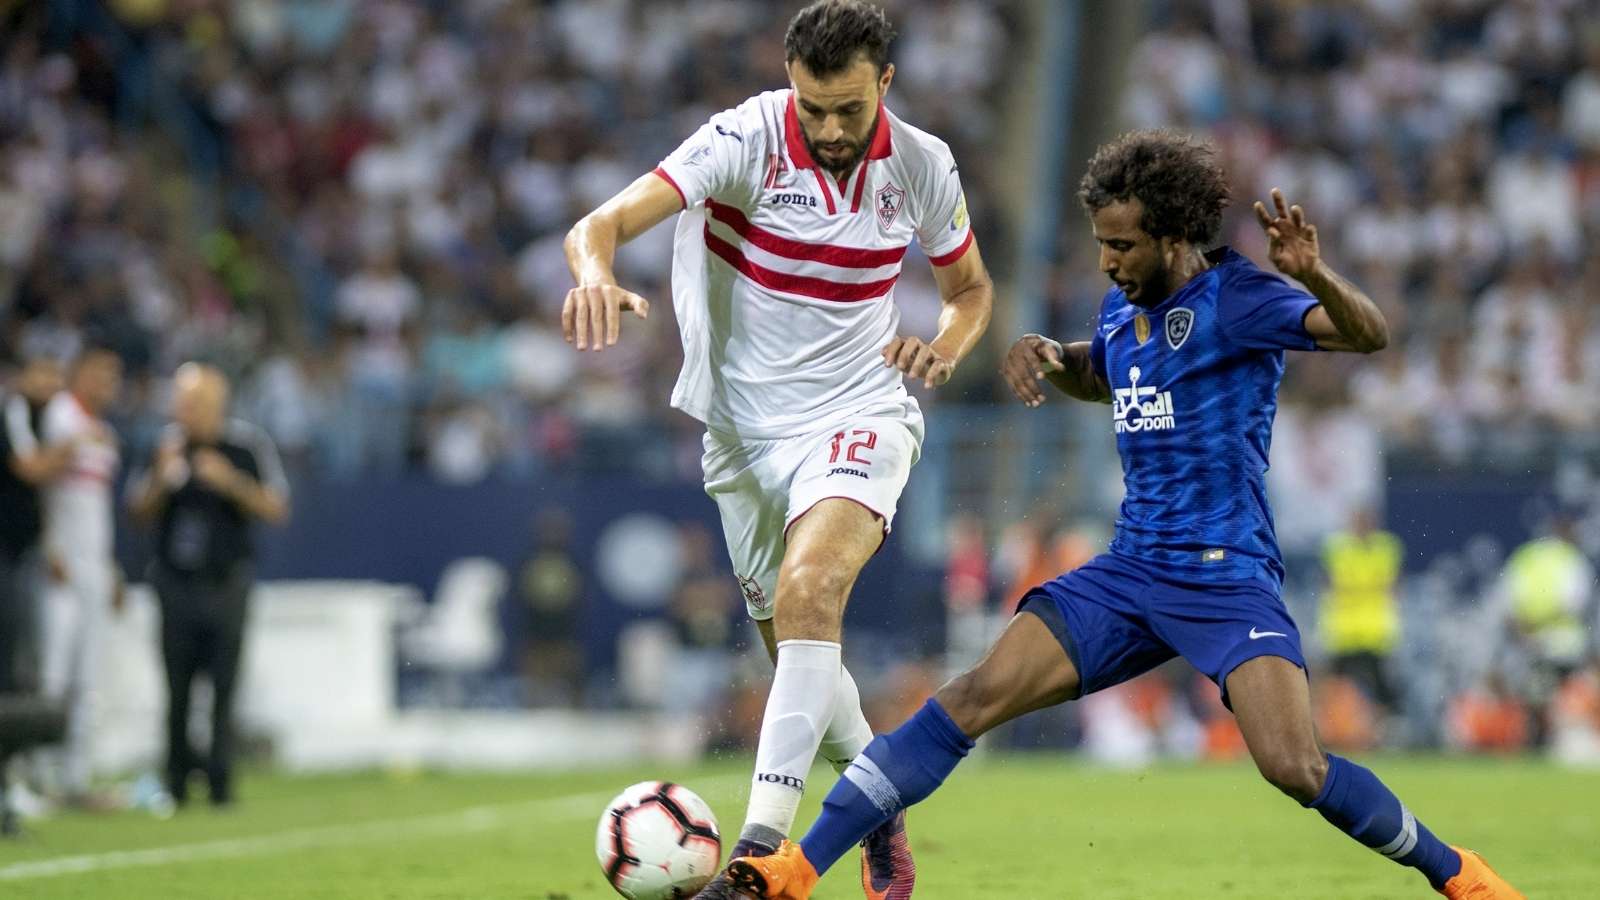 Hilal Vs Zamalek, Egyptian Saudi Super Cup 2018